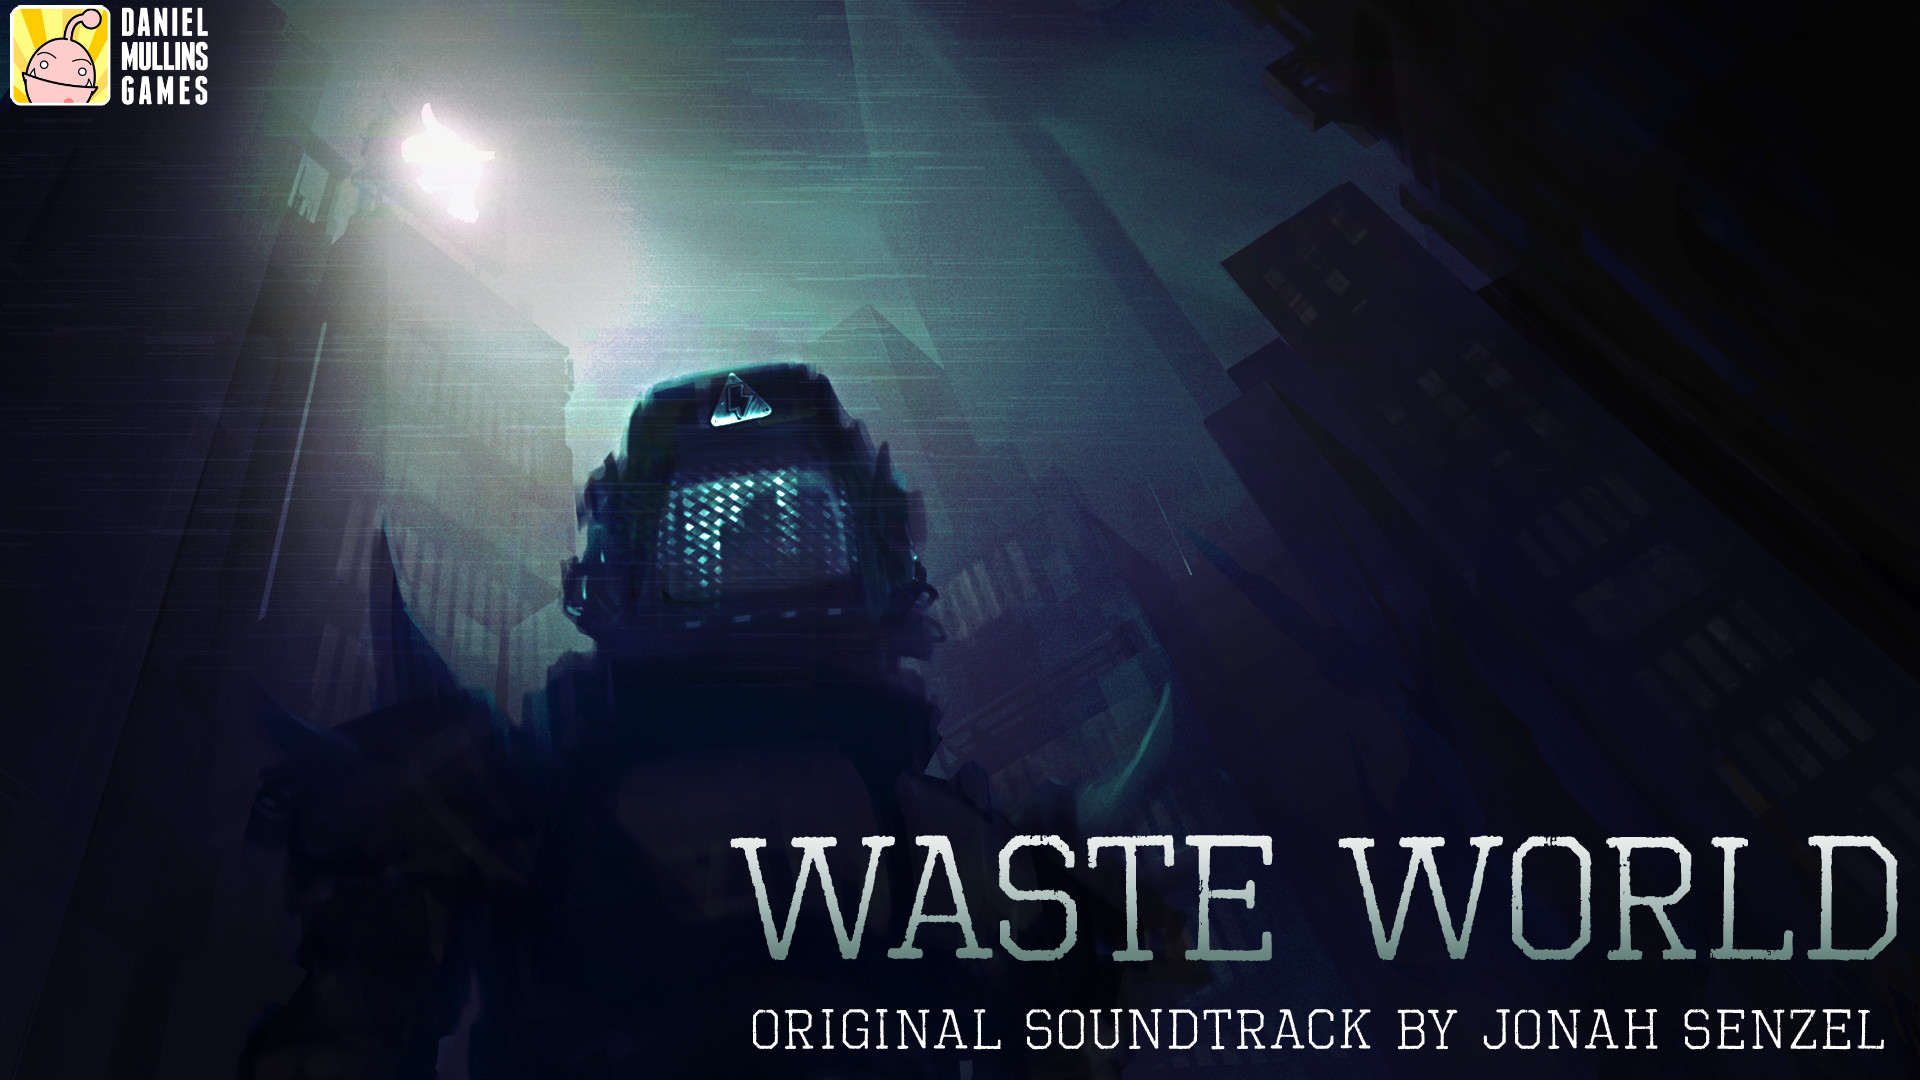 The Hex - "Waste World" Original Soundtrack Featured Screenshot #1